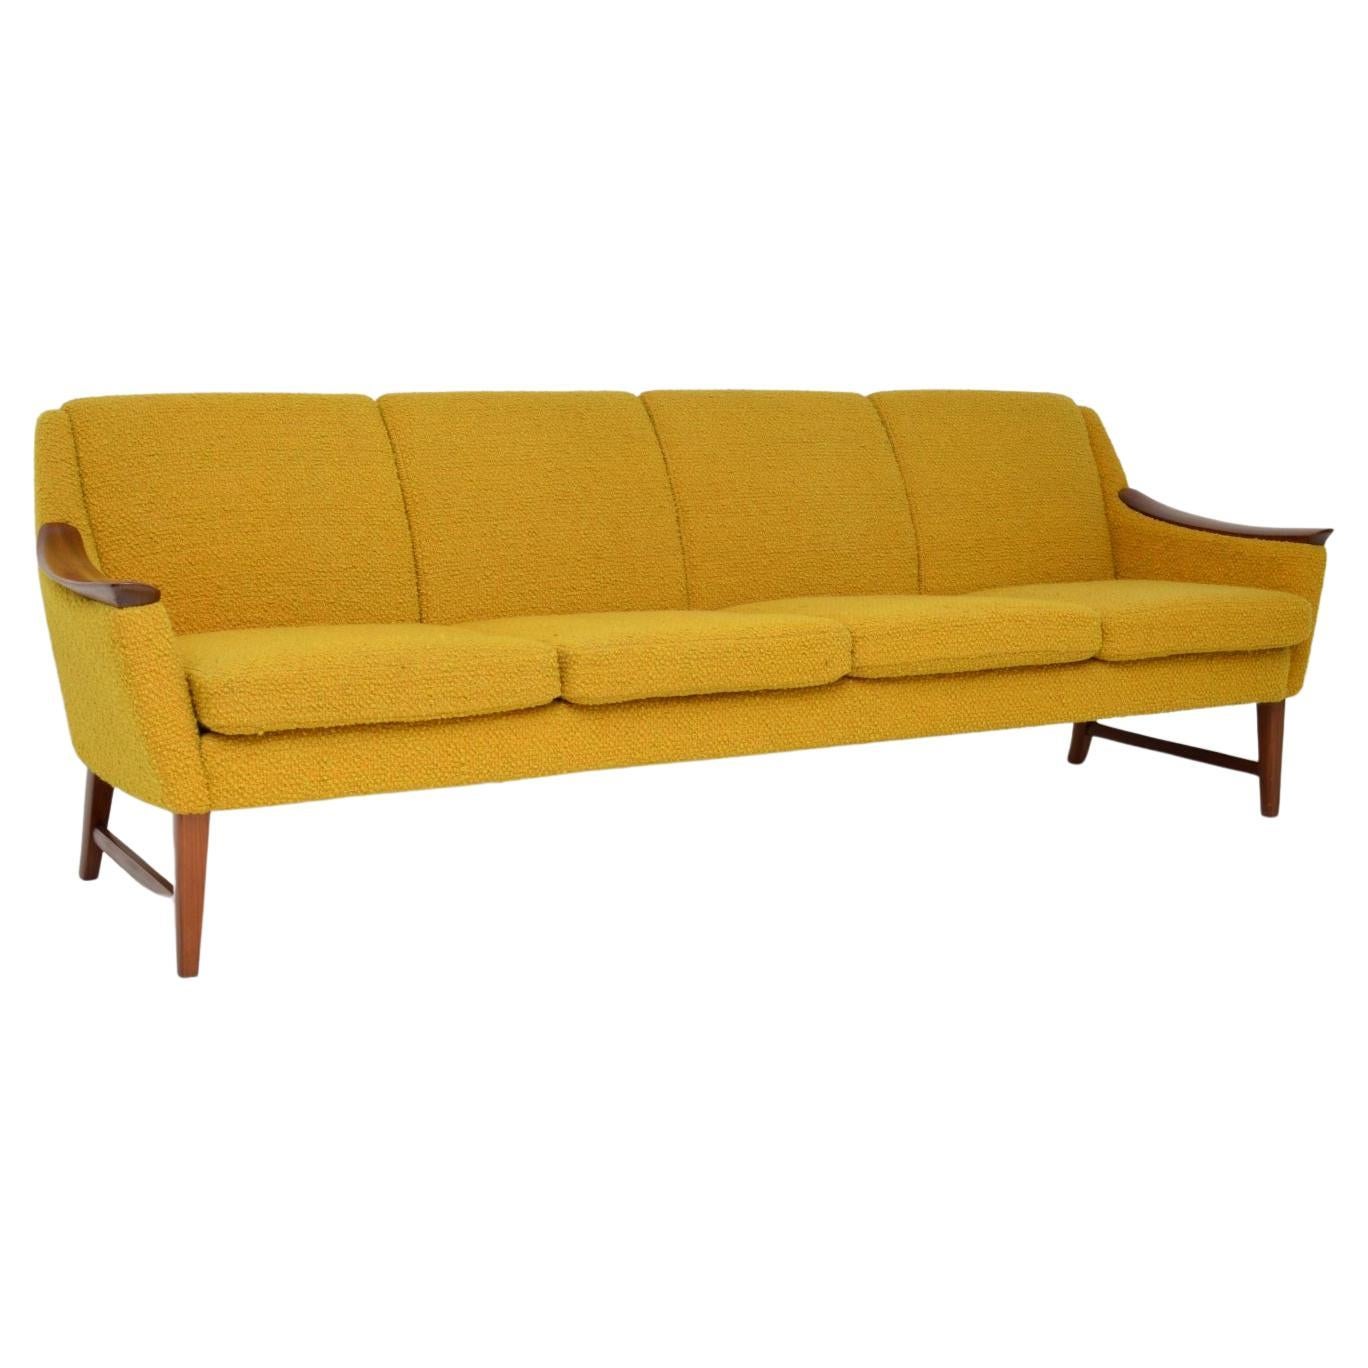 1960's Norwegian Vintage Teak Sofa in Mustard Yellow Boucle